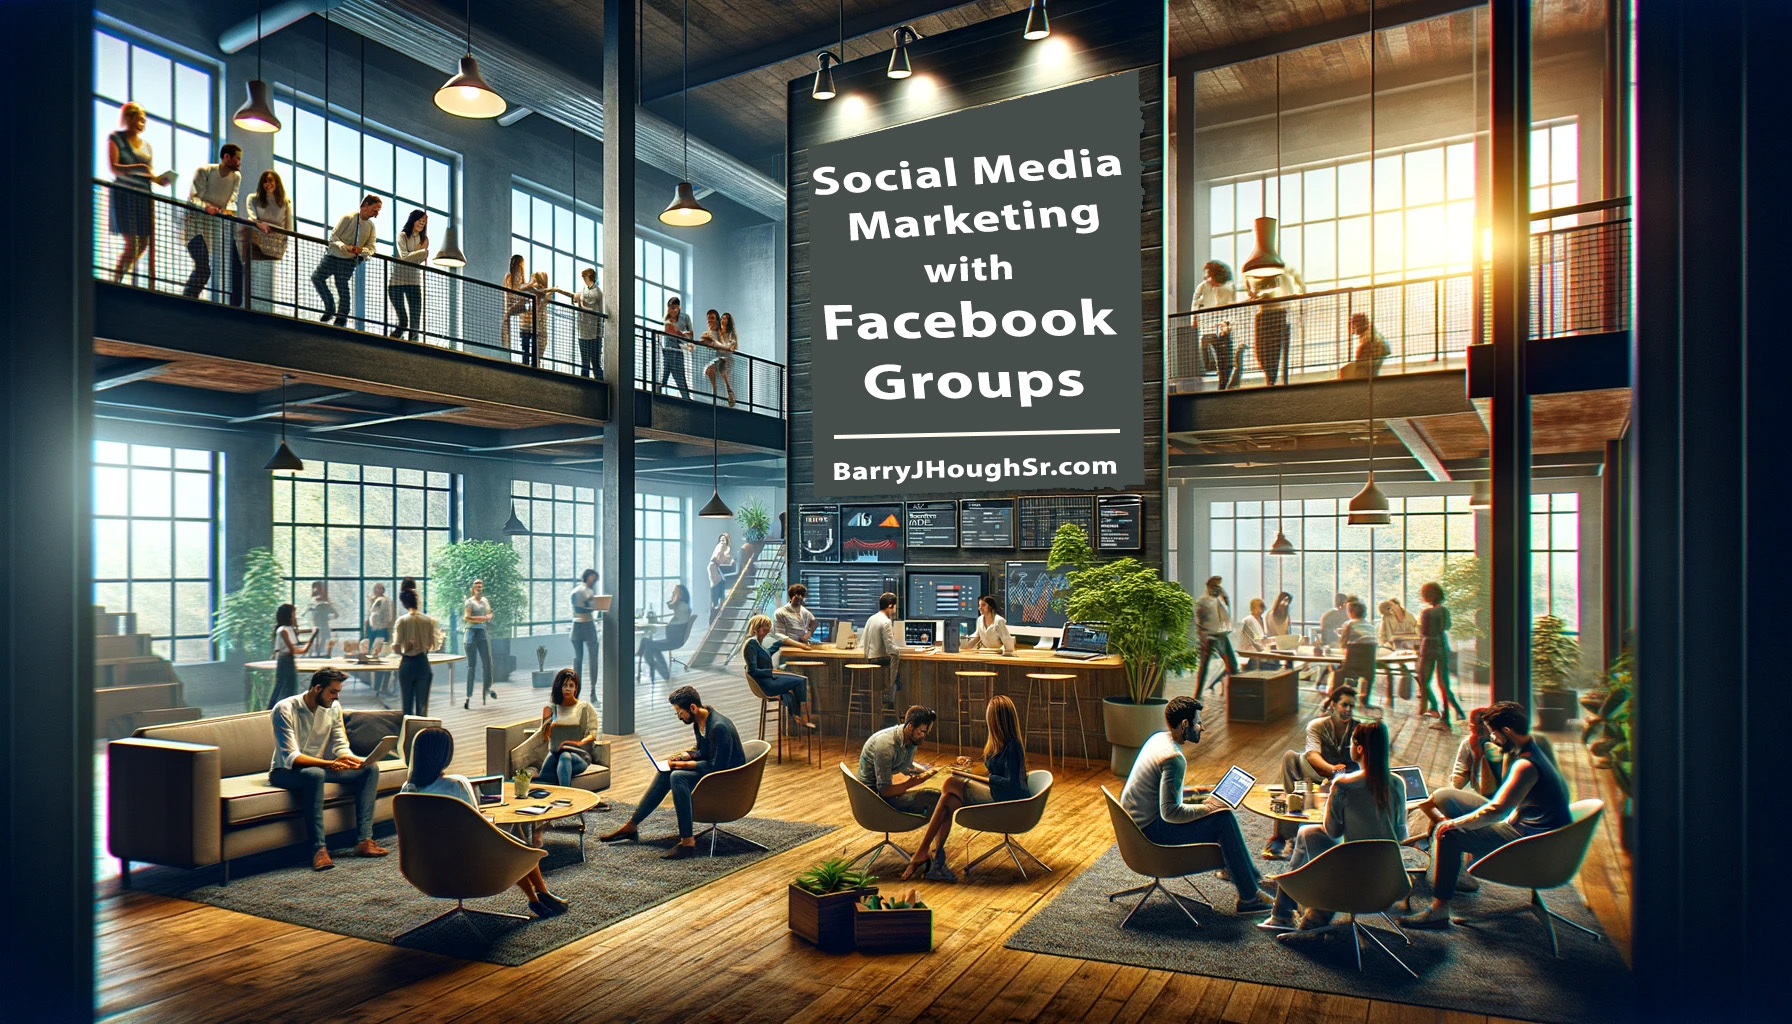 Social Media Marketing with Facebook Groups - Barry J. Hough Sr.